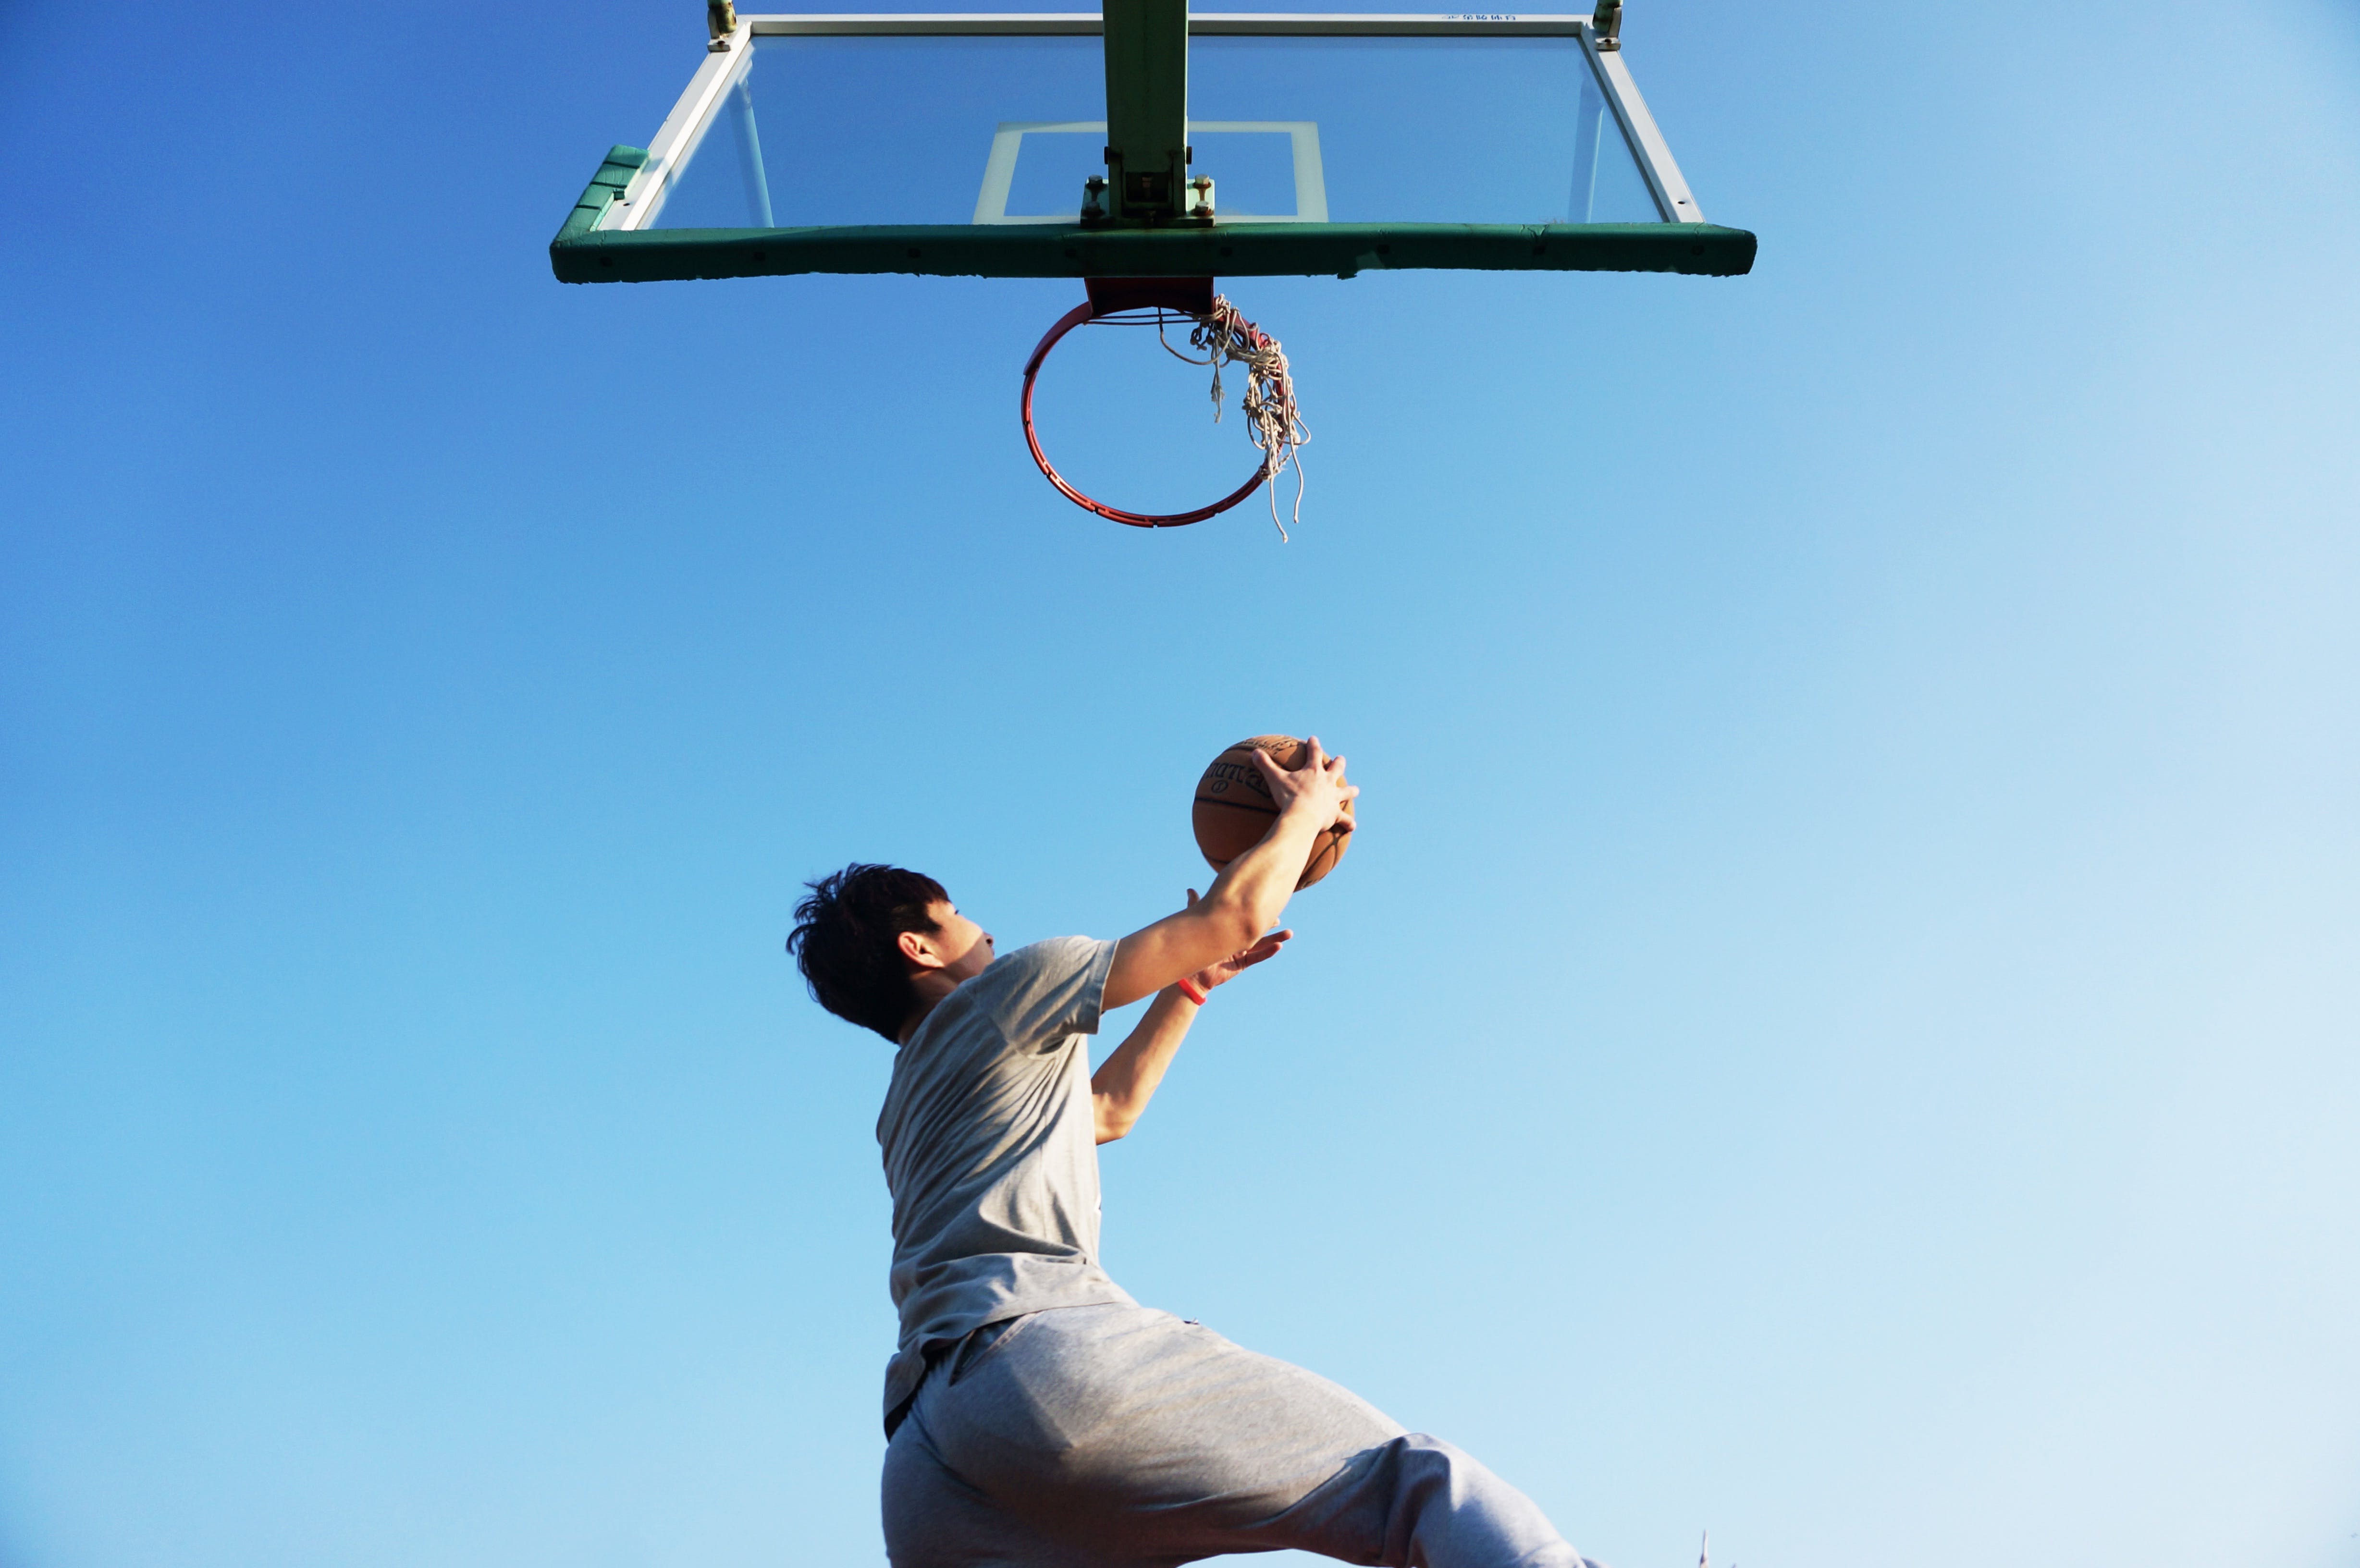 Noi encistellant en una anella de bàsquet. Font: Pixabay